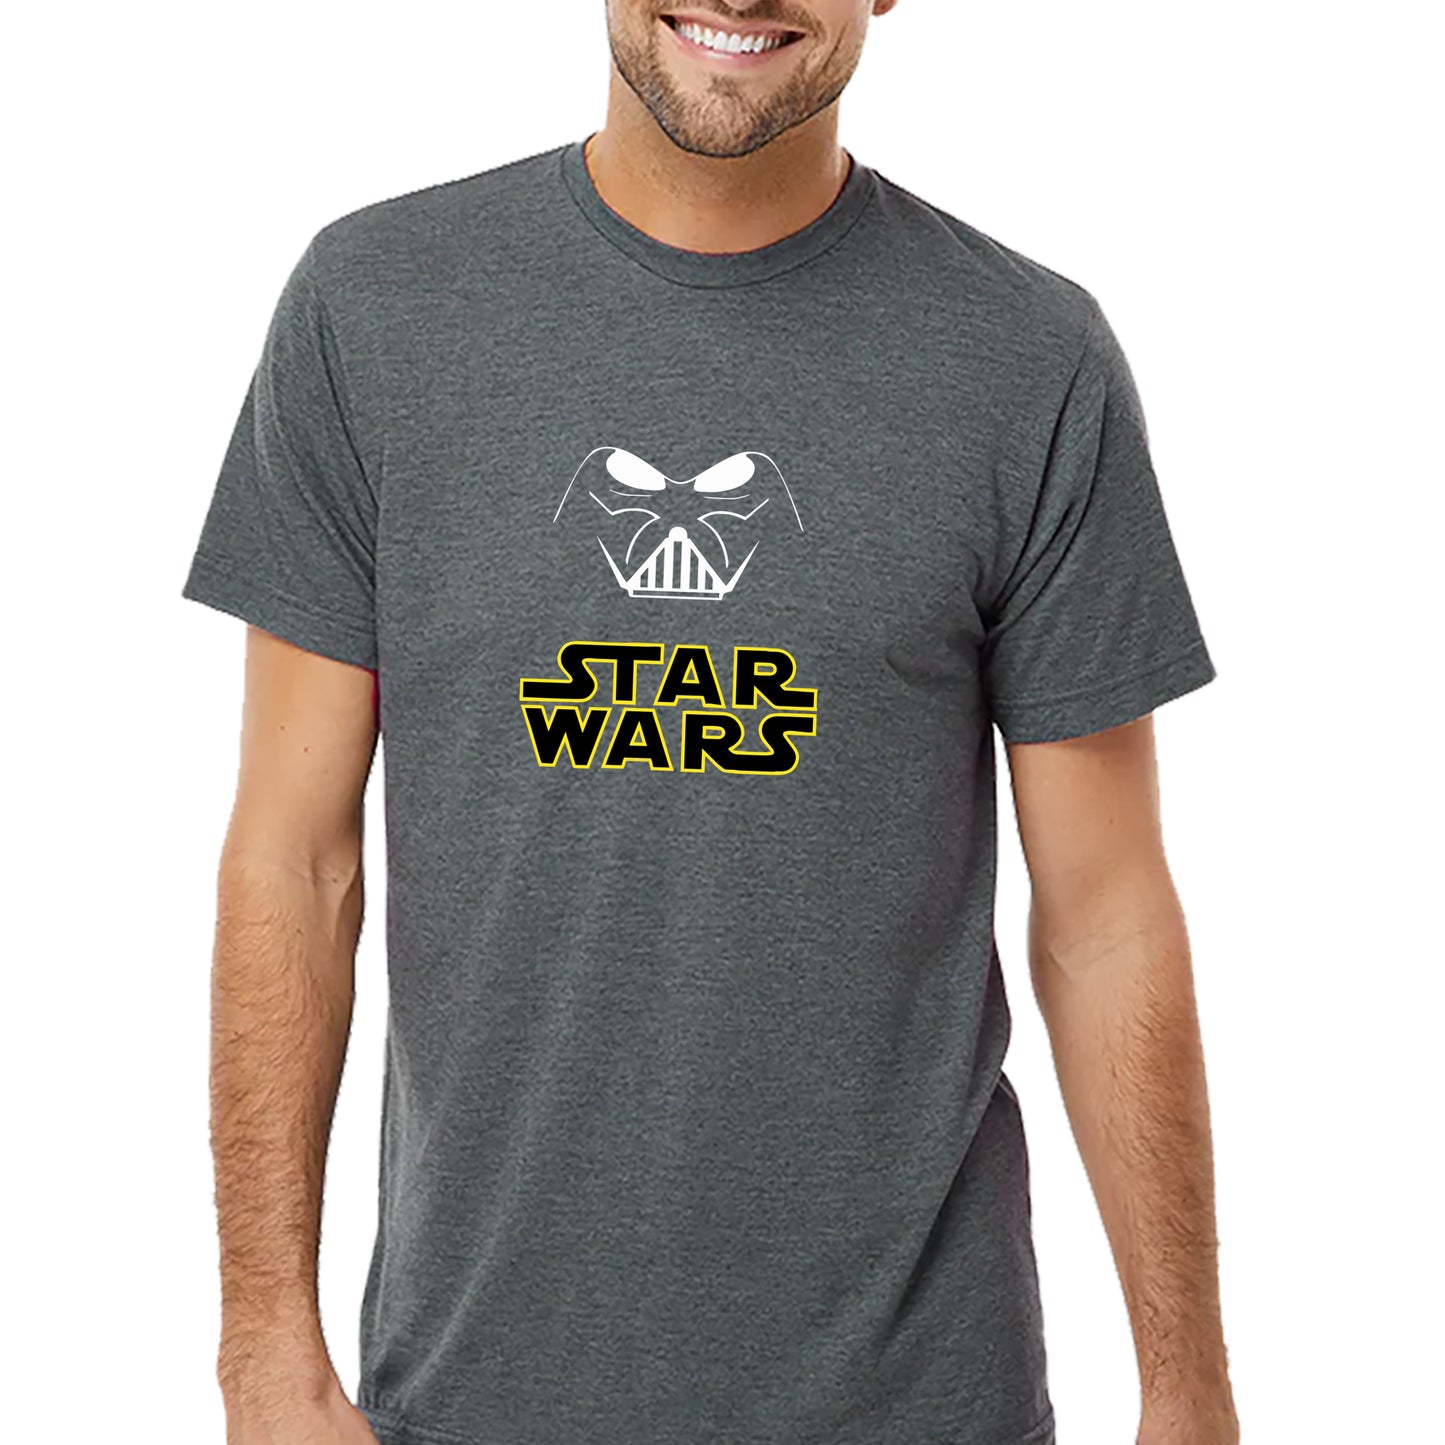 Darth Vader Silhouette T-shirt